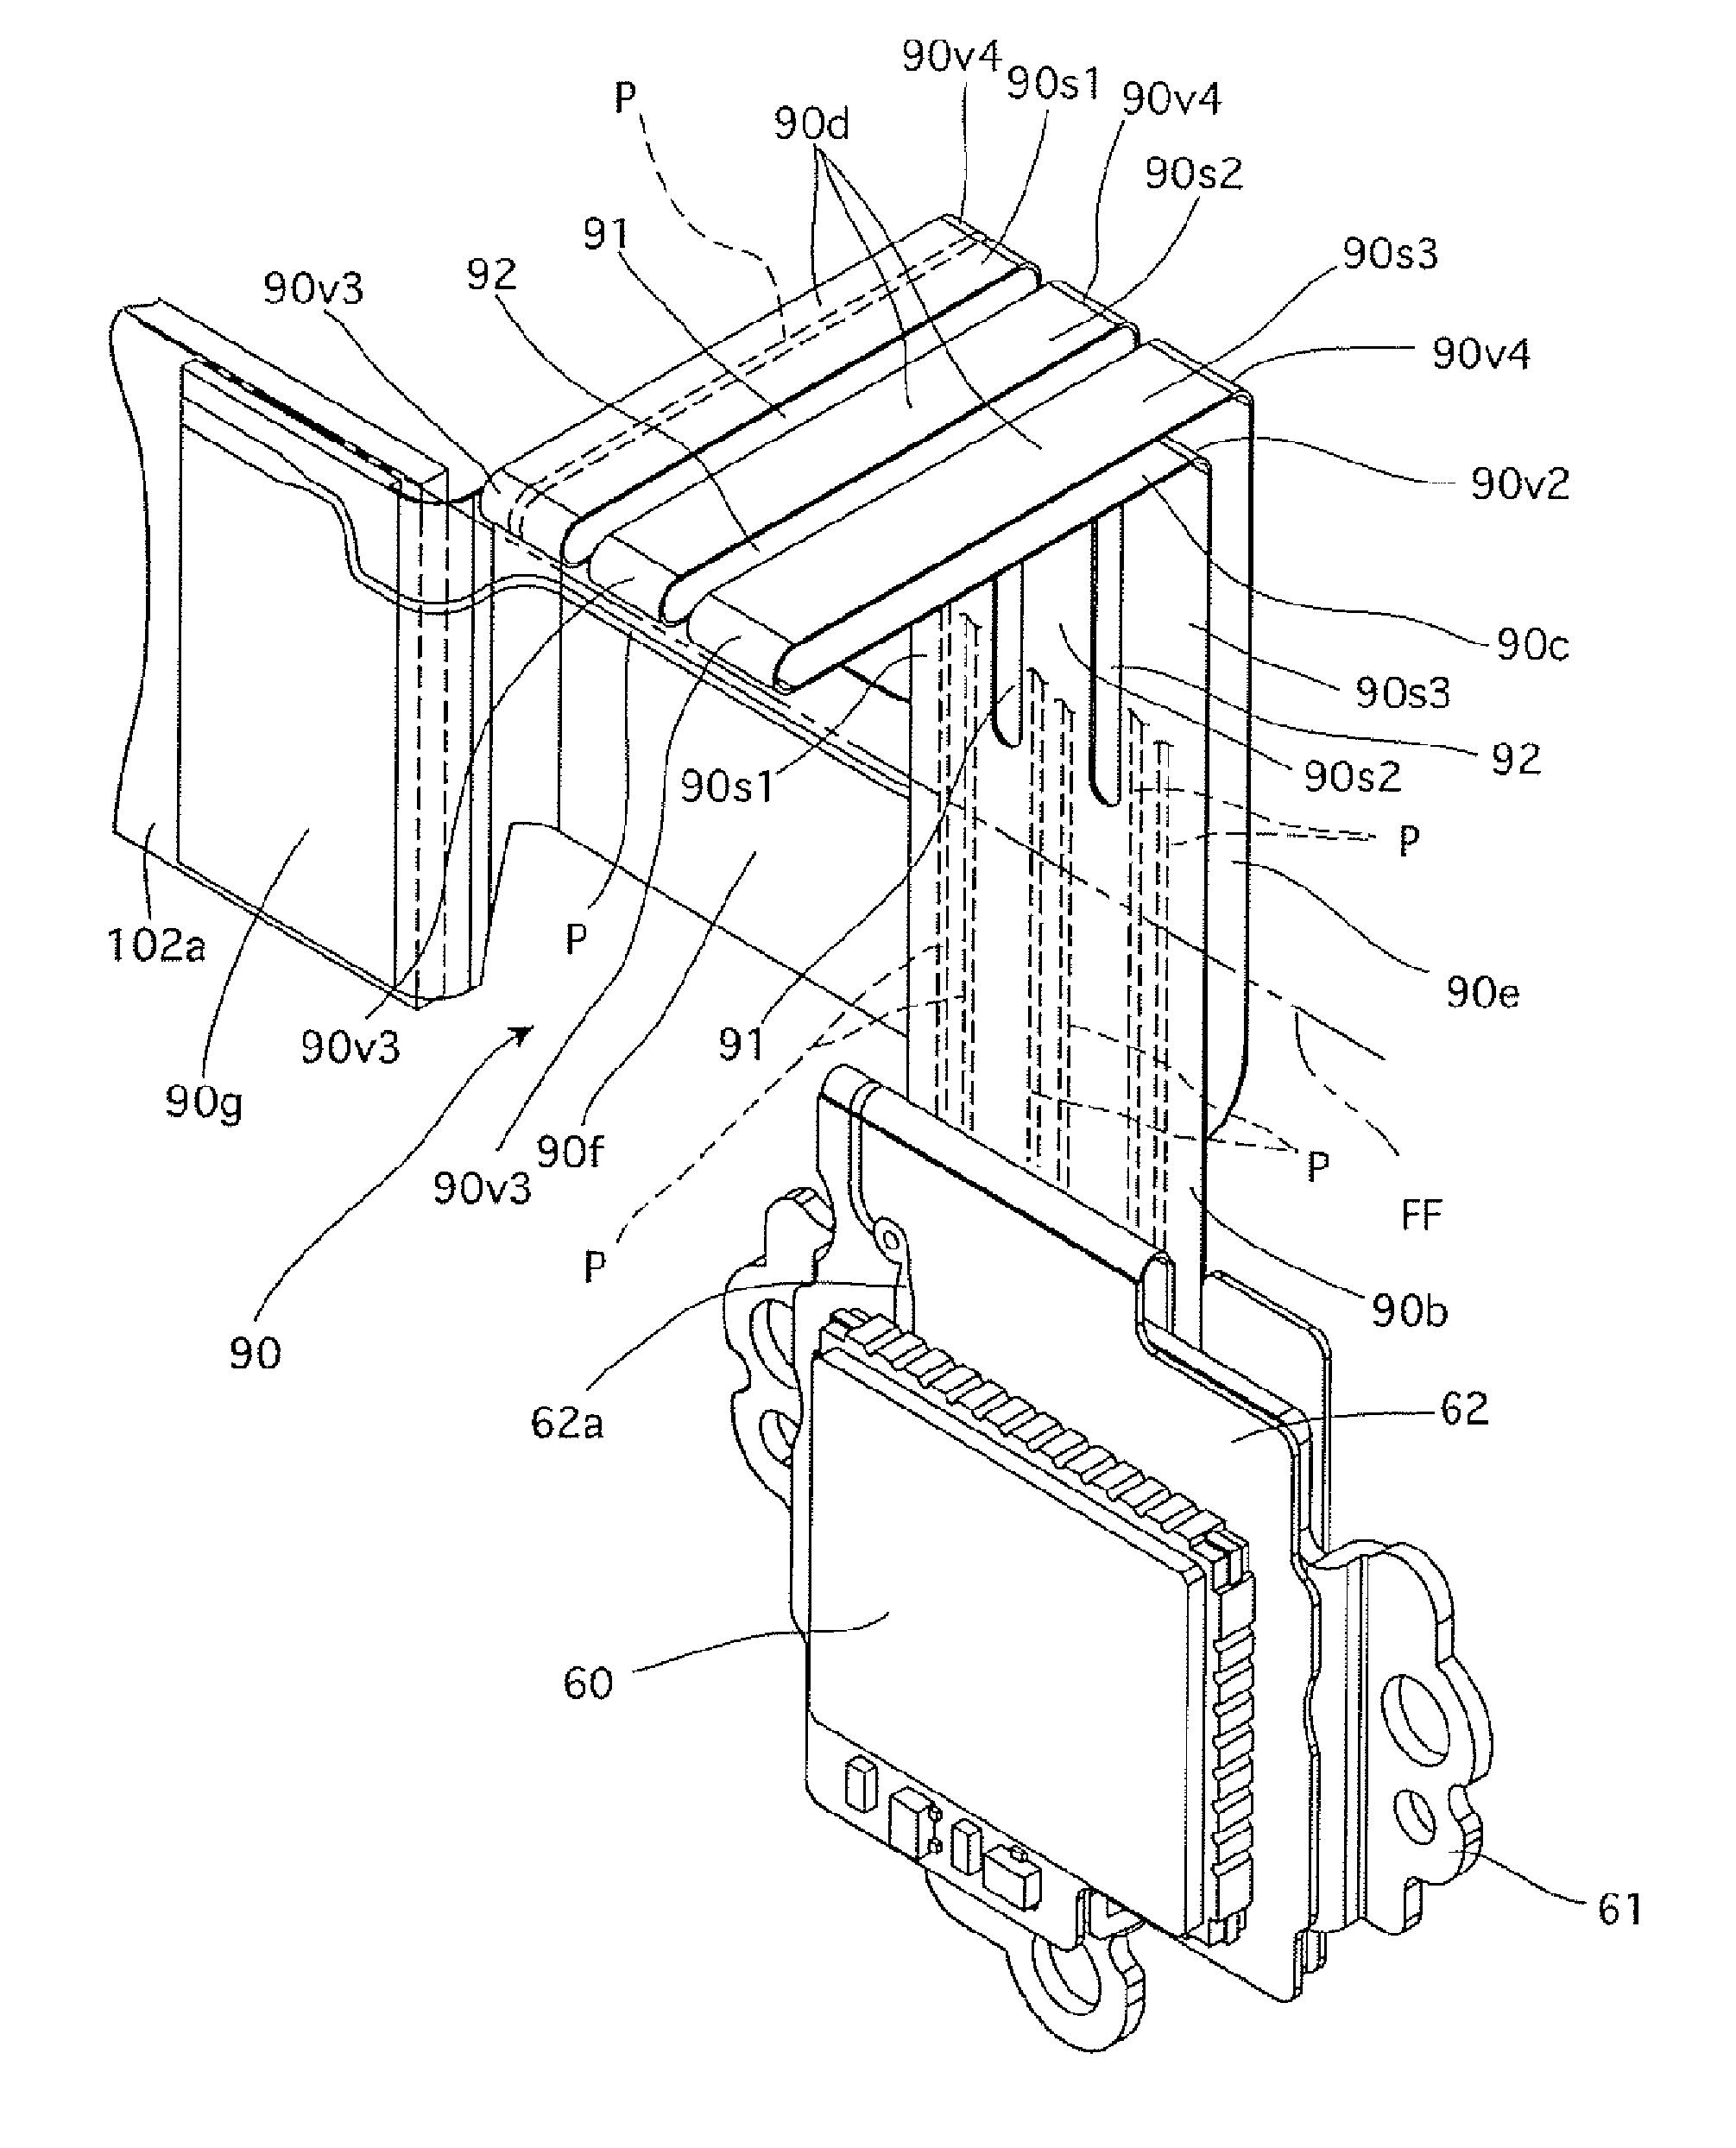 Optical apparatus using flexible printed wiring board